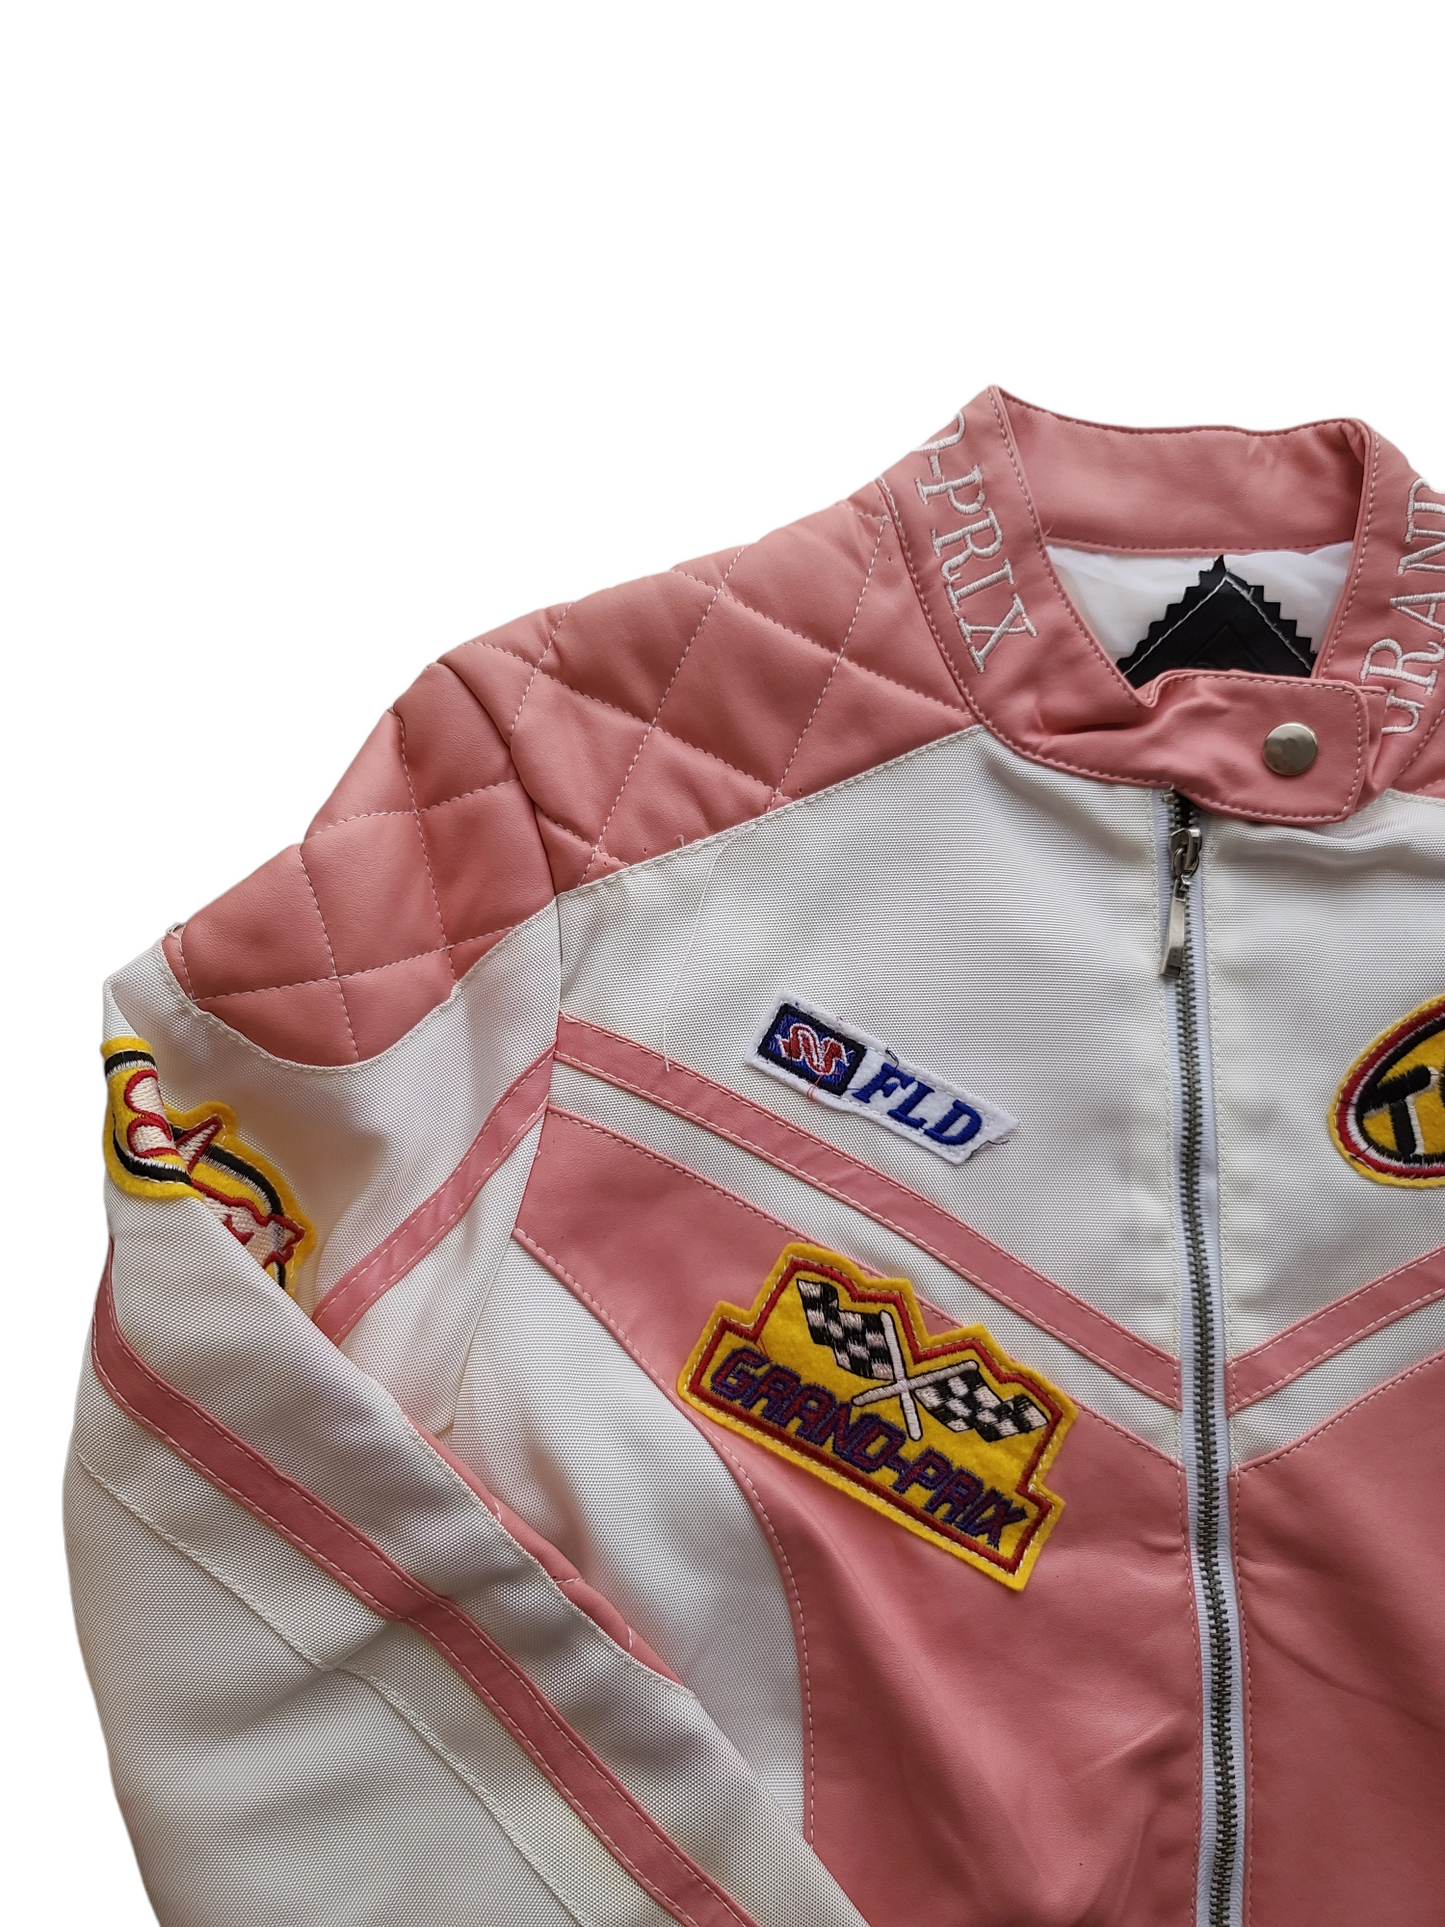 Pink biker jacket y2k